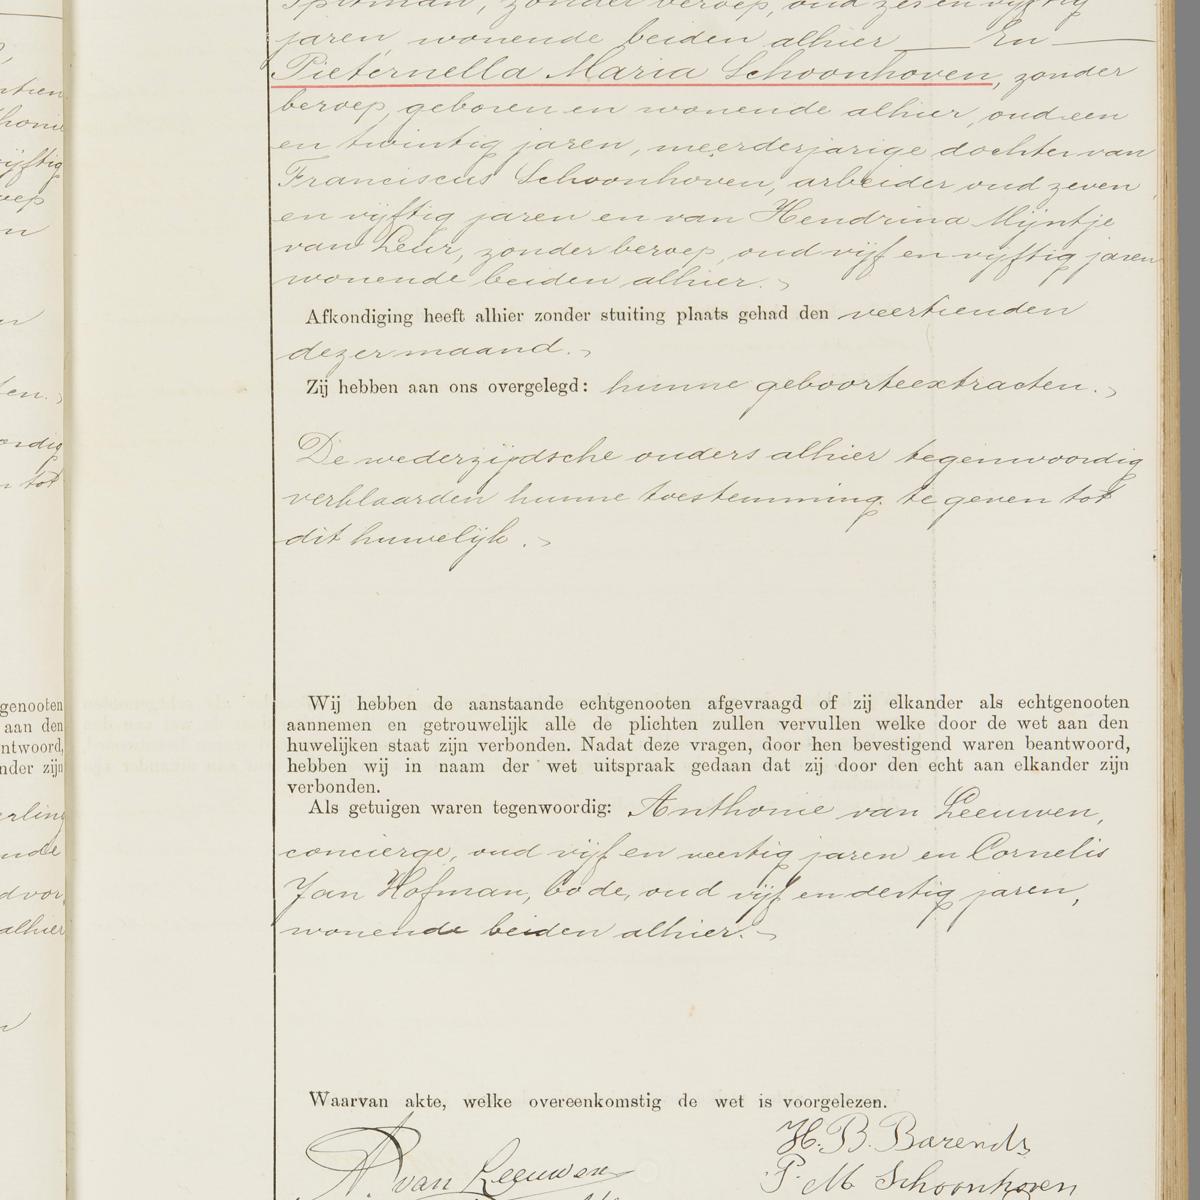 Civil registry of marriages, Utrecht, 1918, record 983